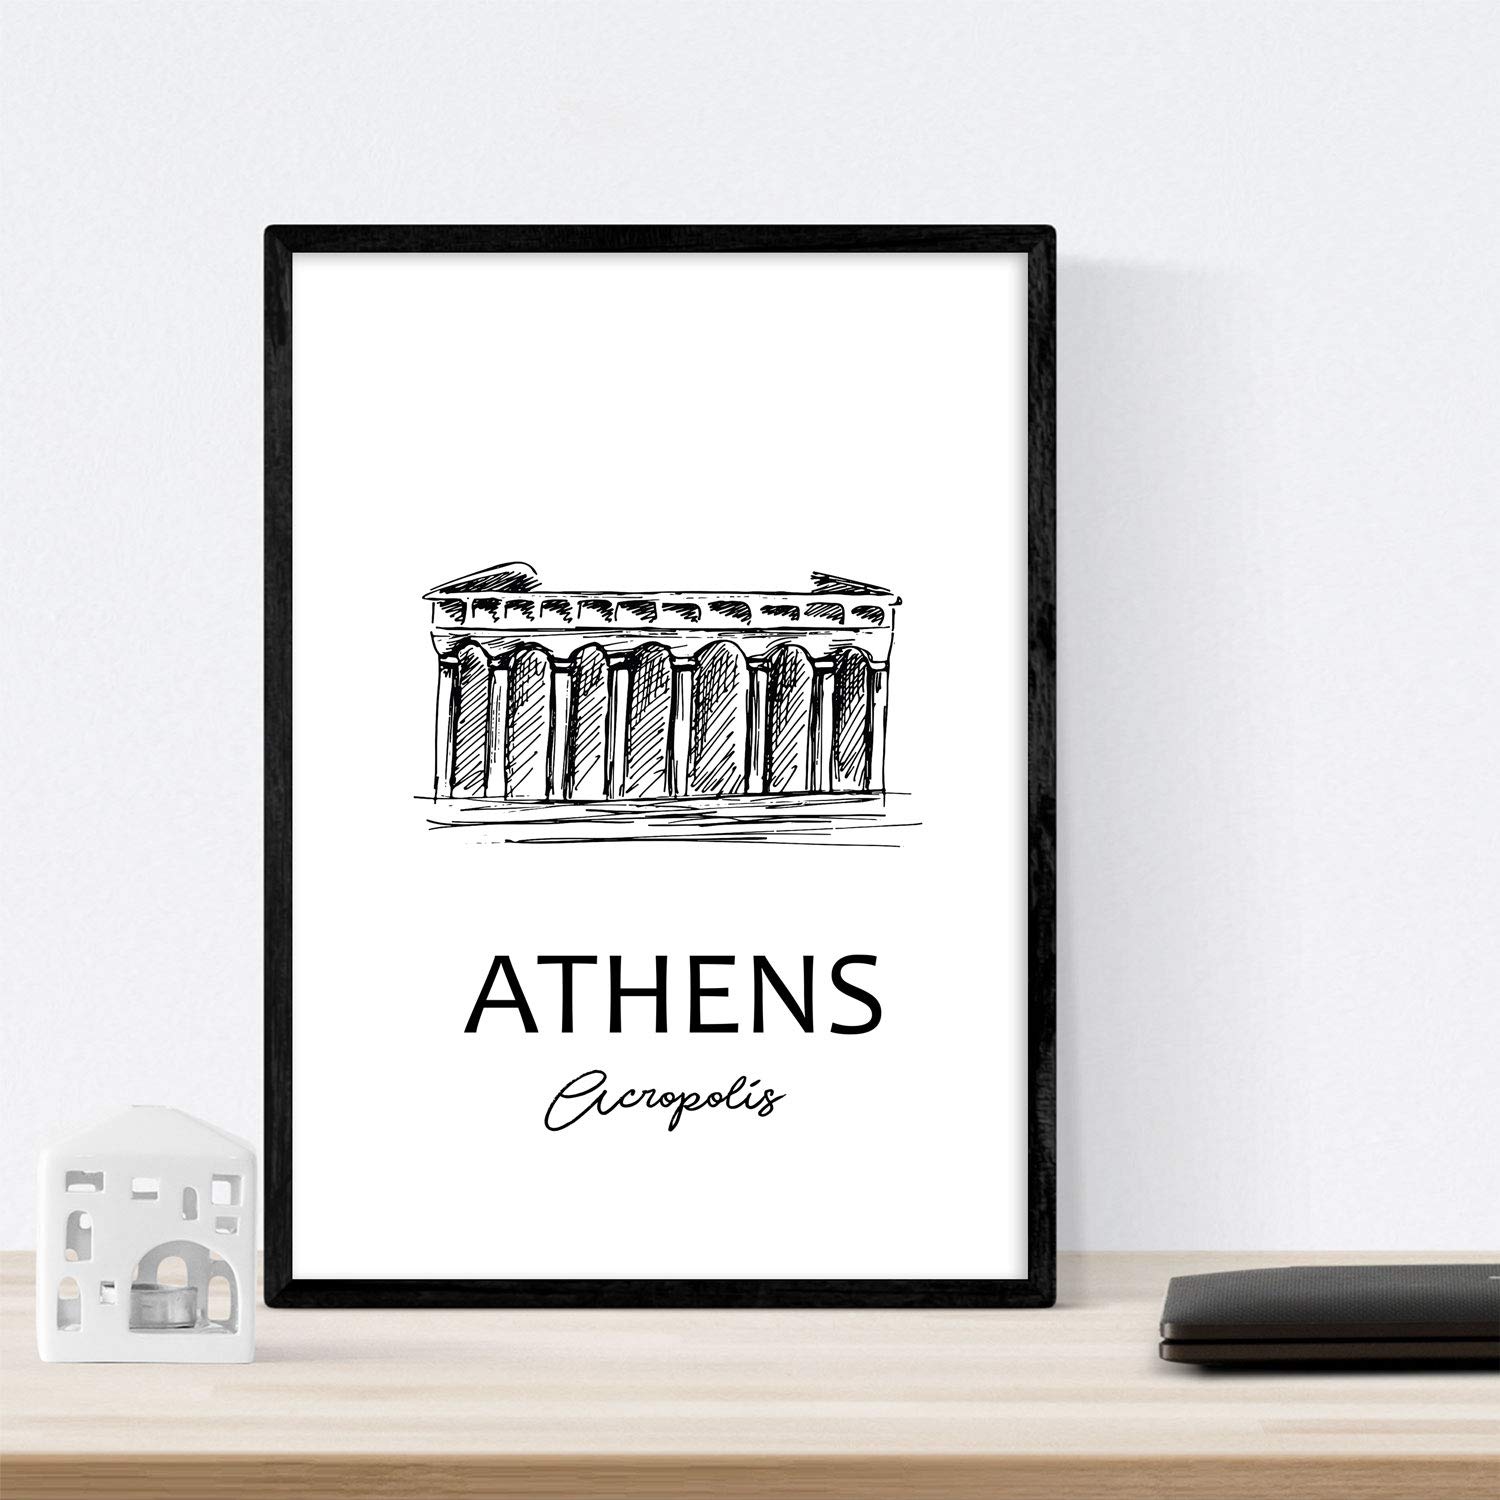 Pack de posters de Atenas - Acropolis. Láminas con monumentos de ciudades.-Artwork-Nacnic-Nacnic Estudio SL